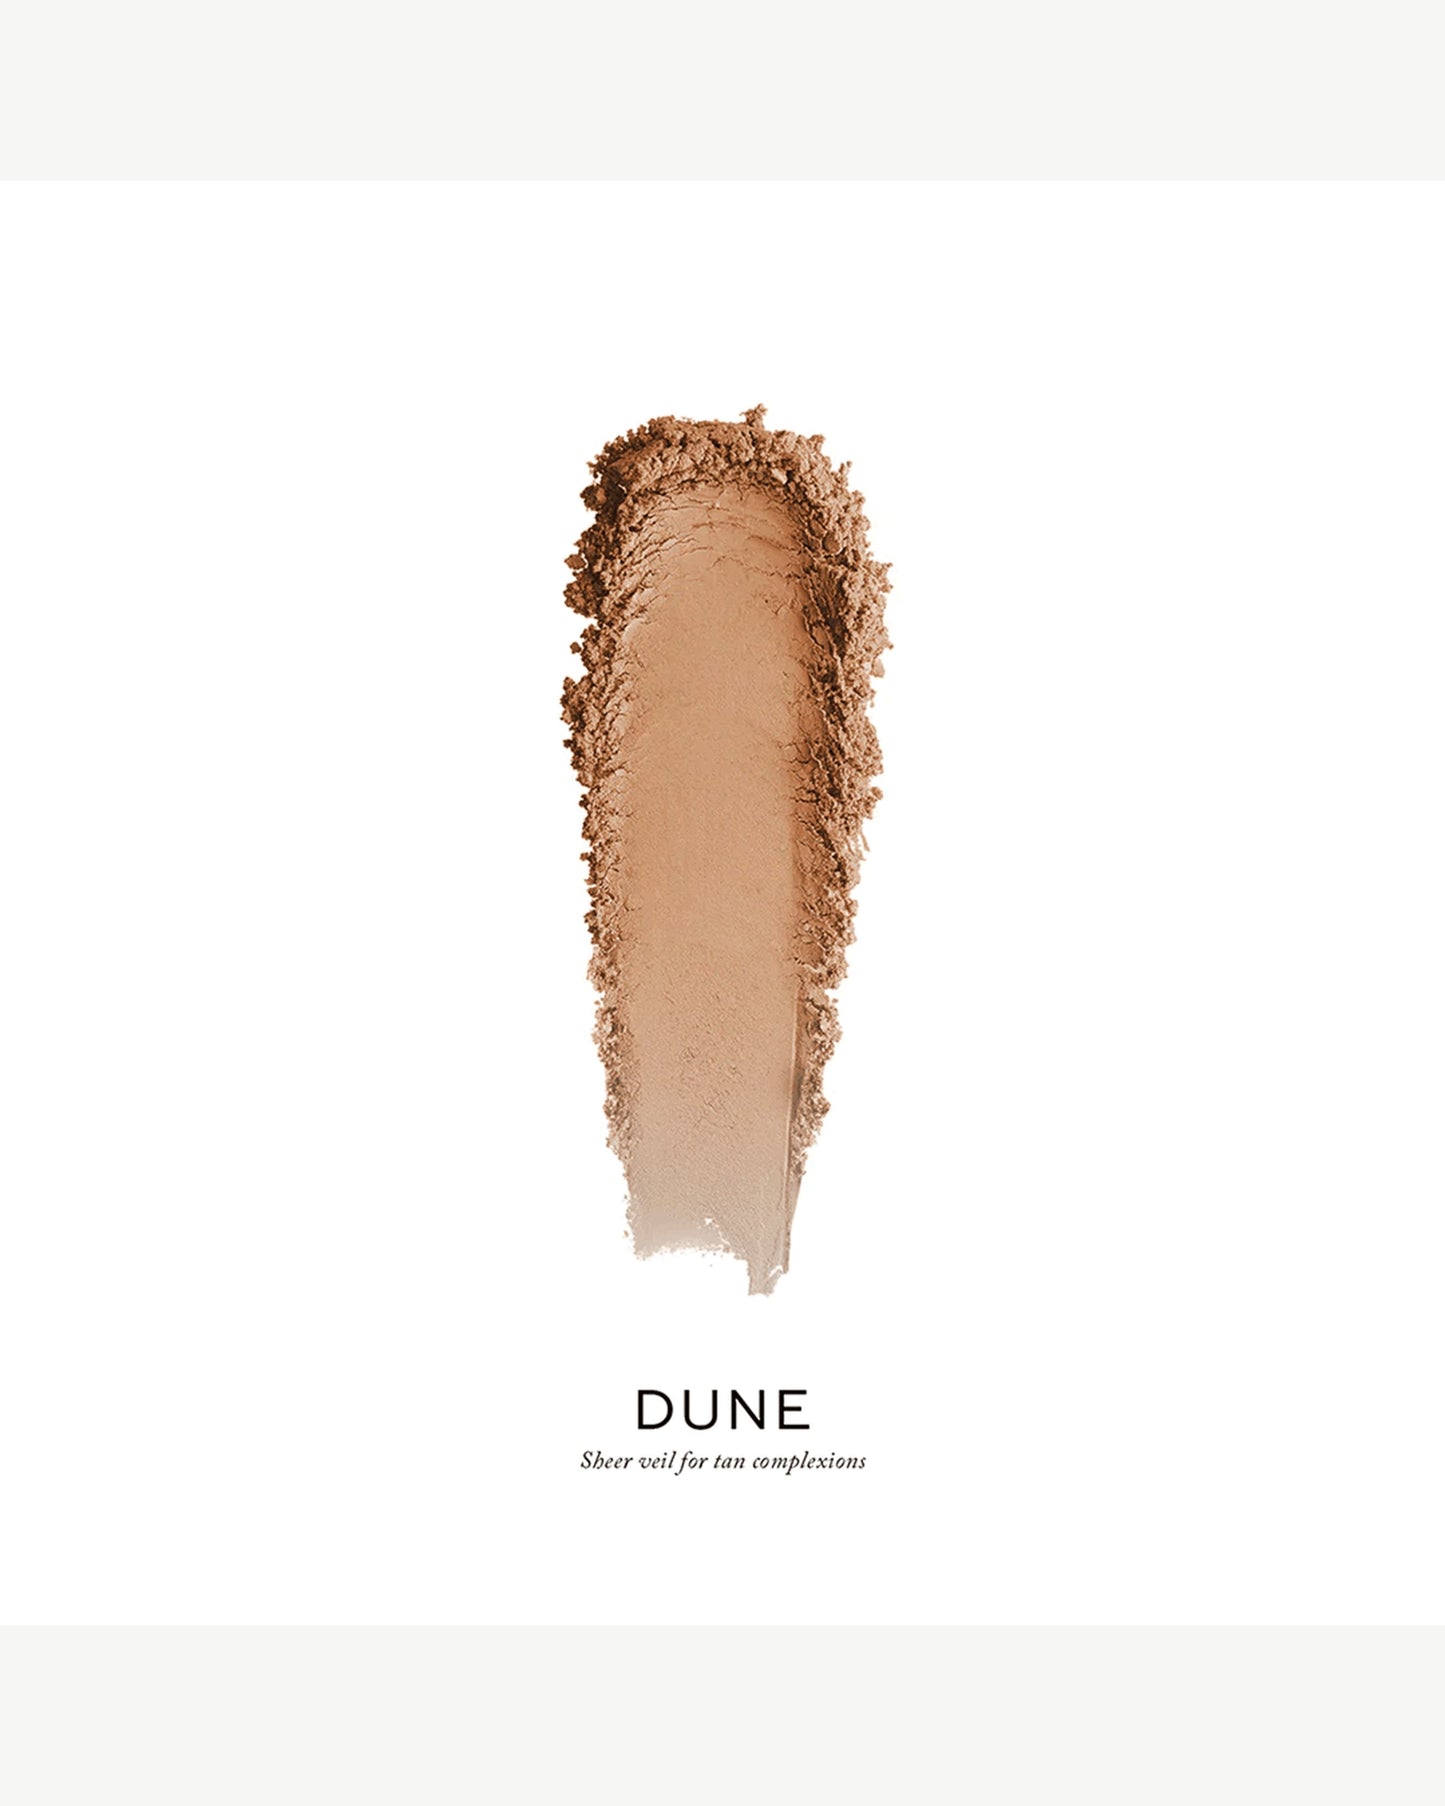 Dune (for medium-tan complexions)